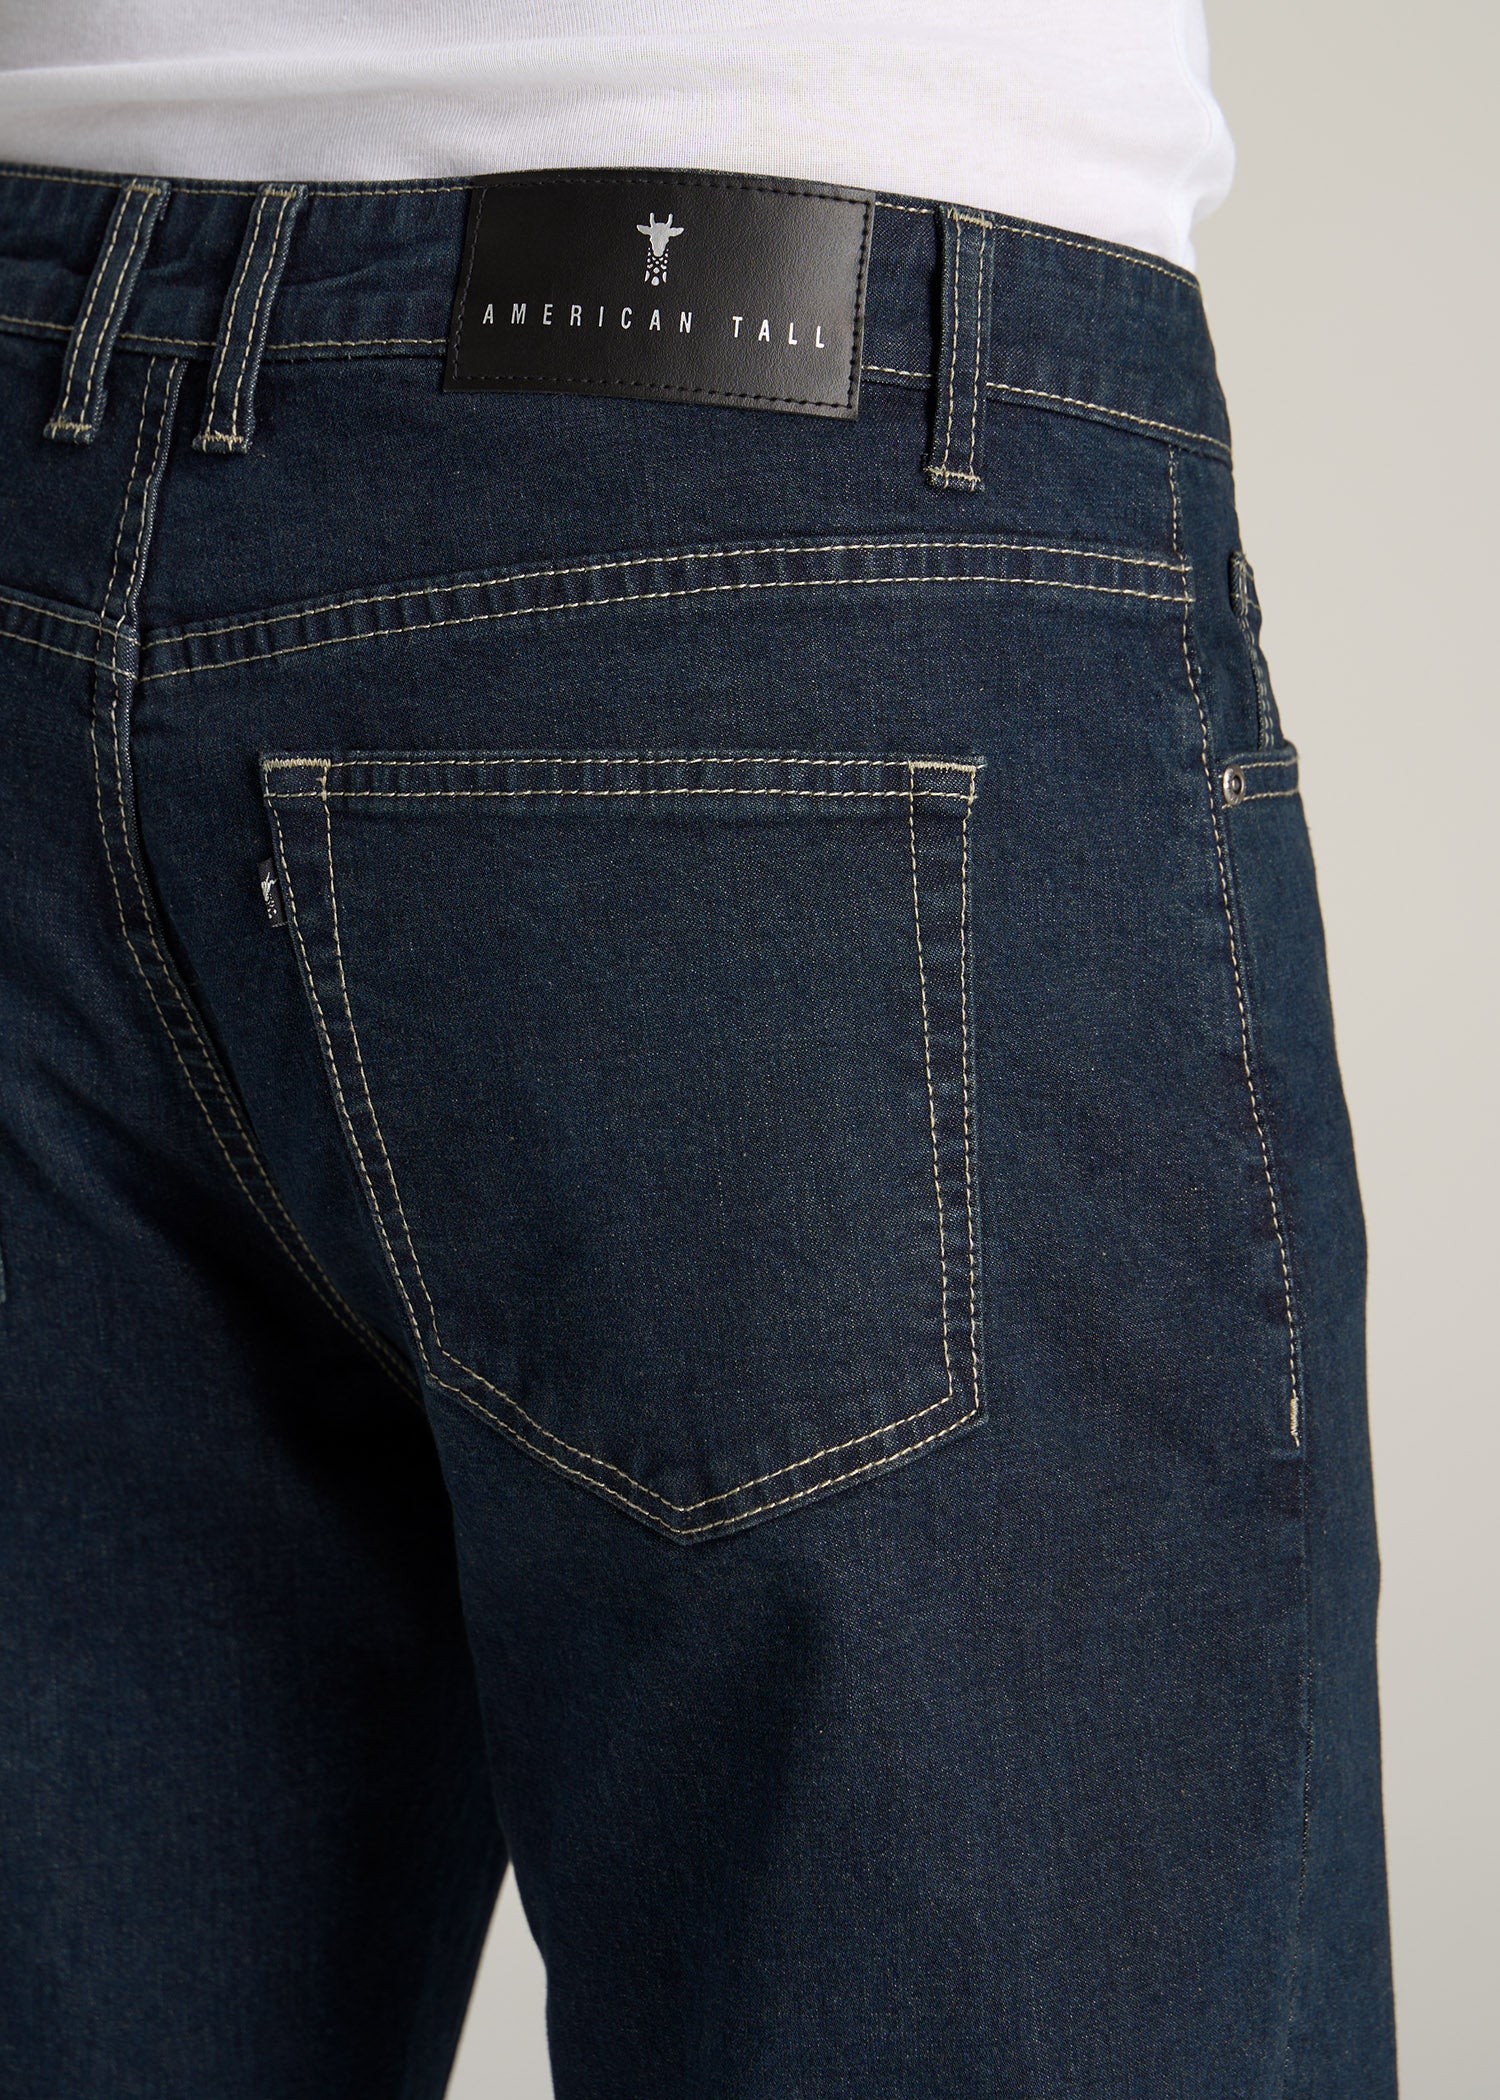 American-Tall-Men-Mason-SEMI-RELAXED-Jeans-Dark-Rinse-detail